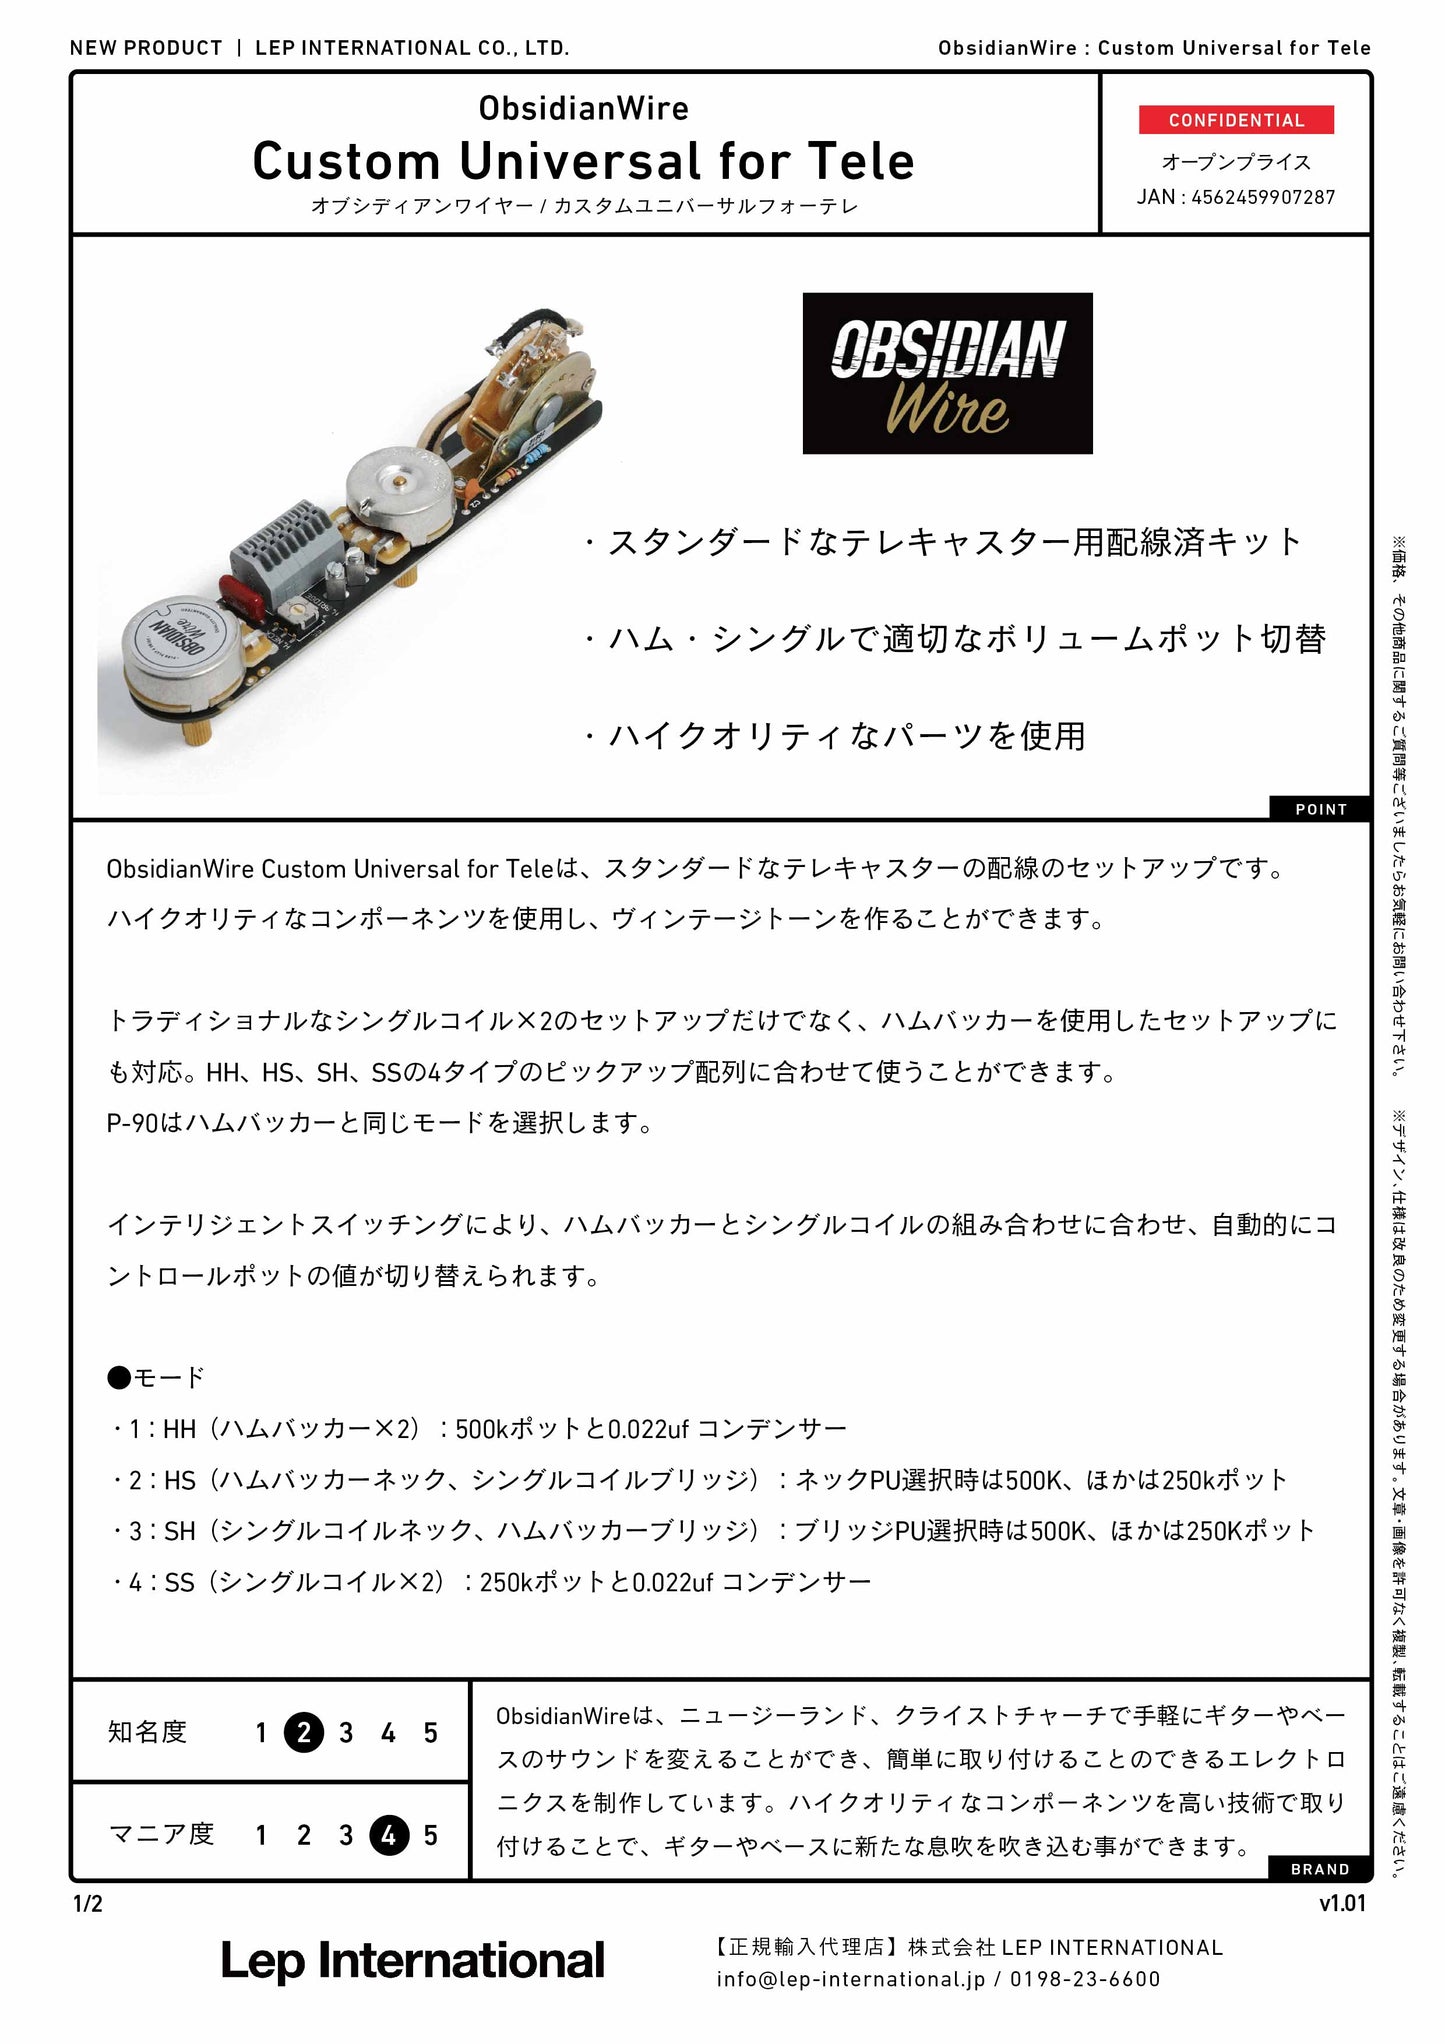 ObsidianWire / Custom Universal for Tele